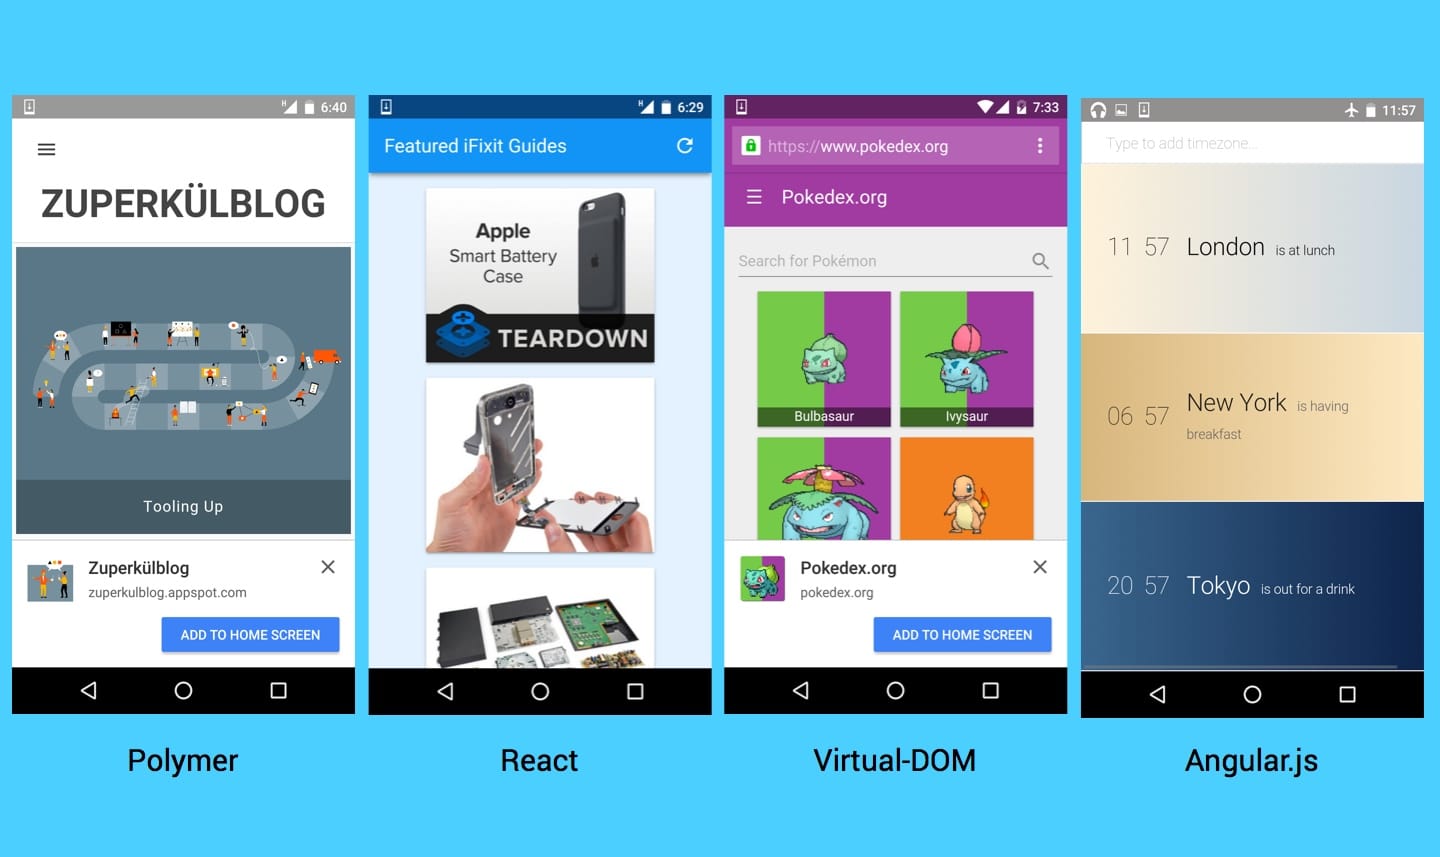 React, Polymer, Virtual DOM 및 AngularJS를 사용하여 구현된 프로그레시브 웹 앱